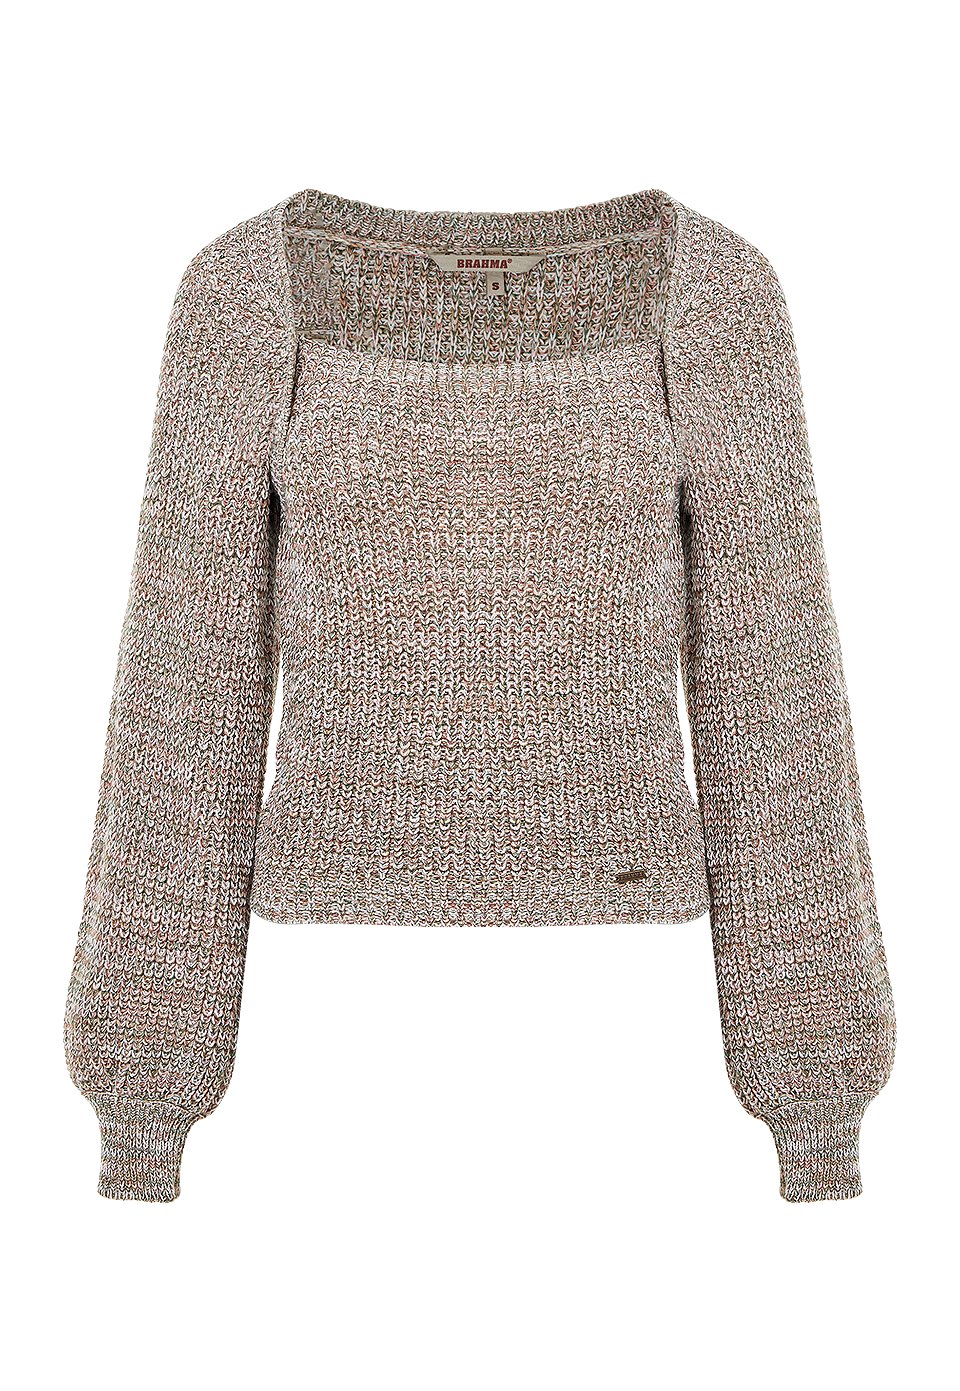 SWE0112-ARE Sweater Mujer Escote Cuadrado